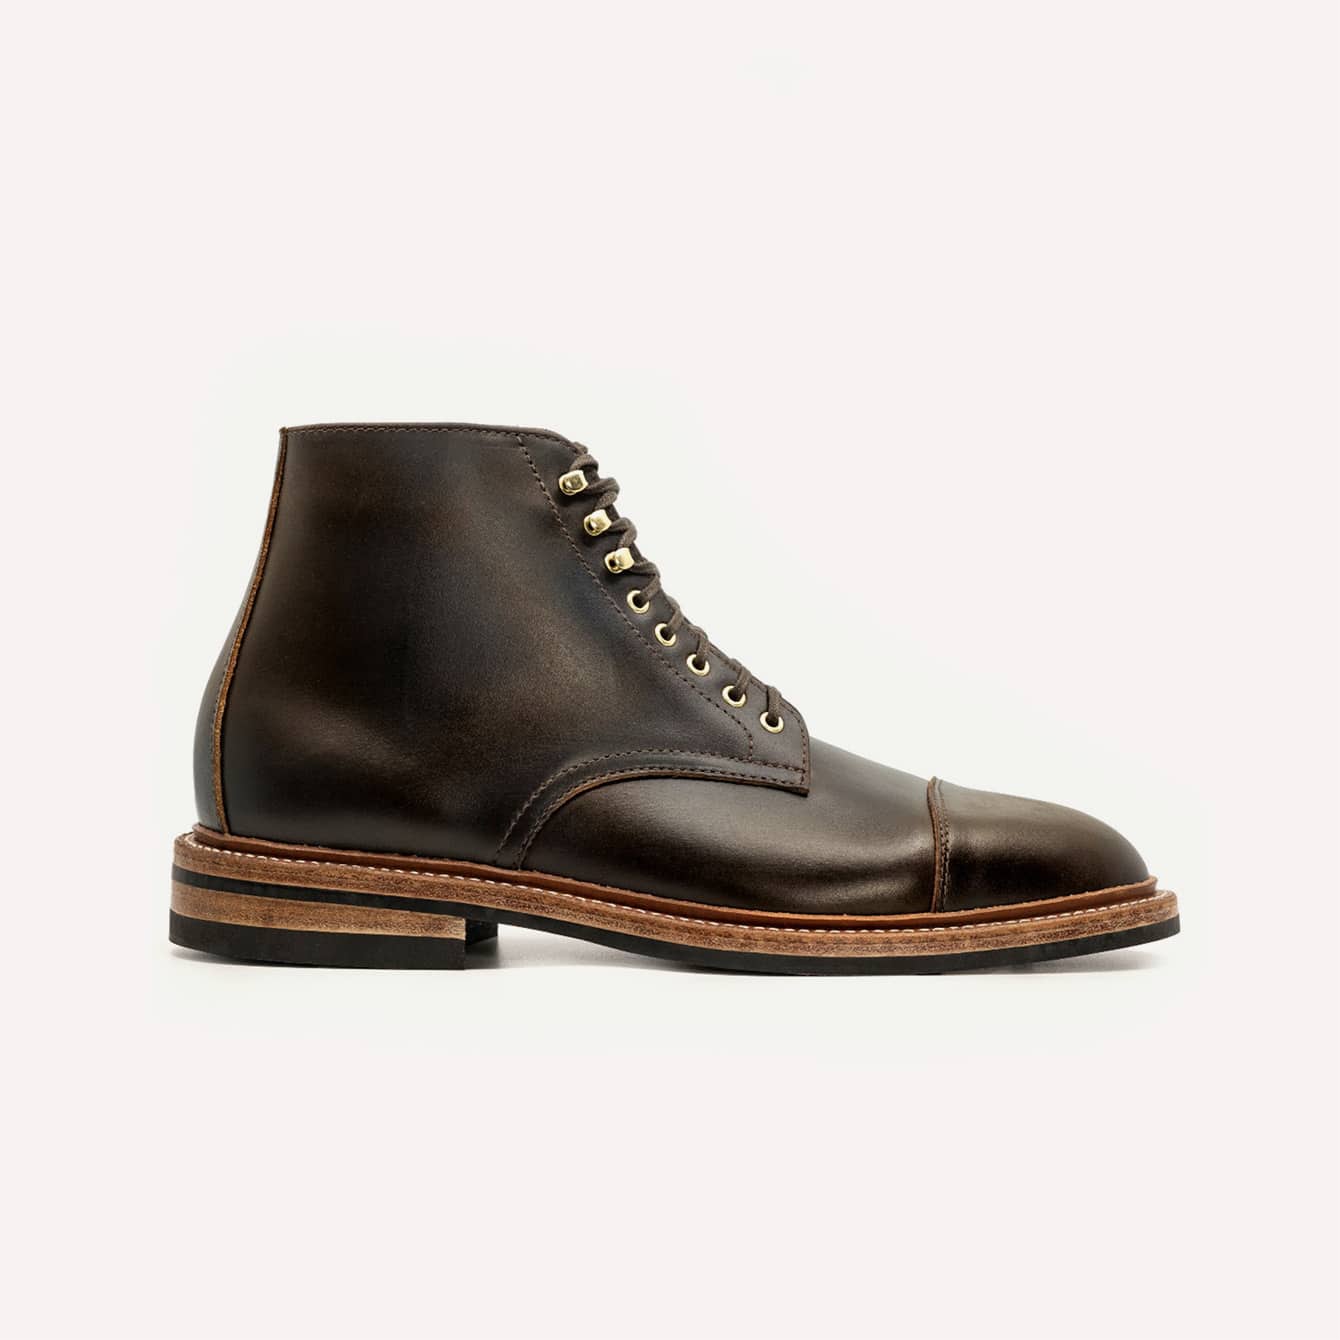 oak street bootmakers lakeshore boot brown